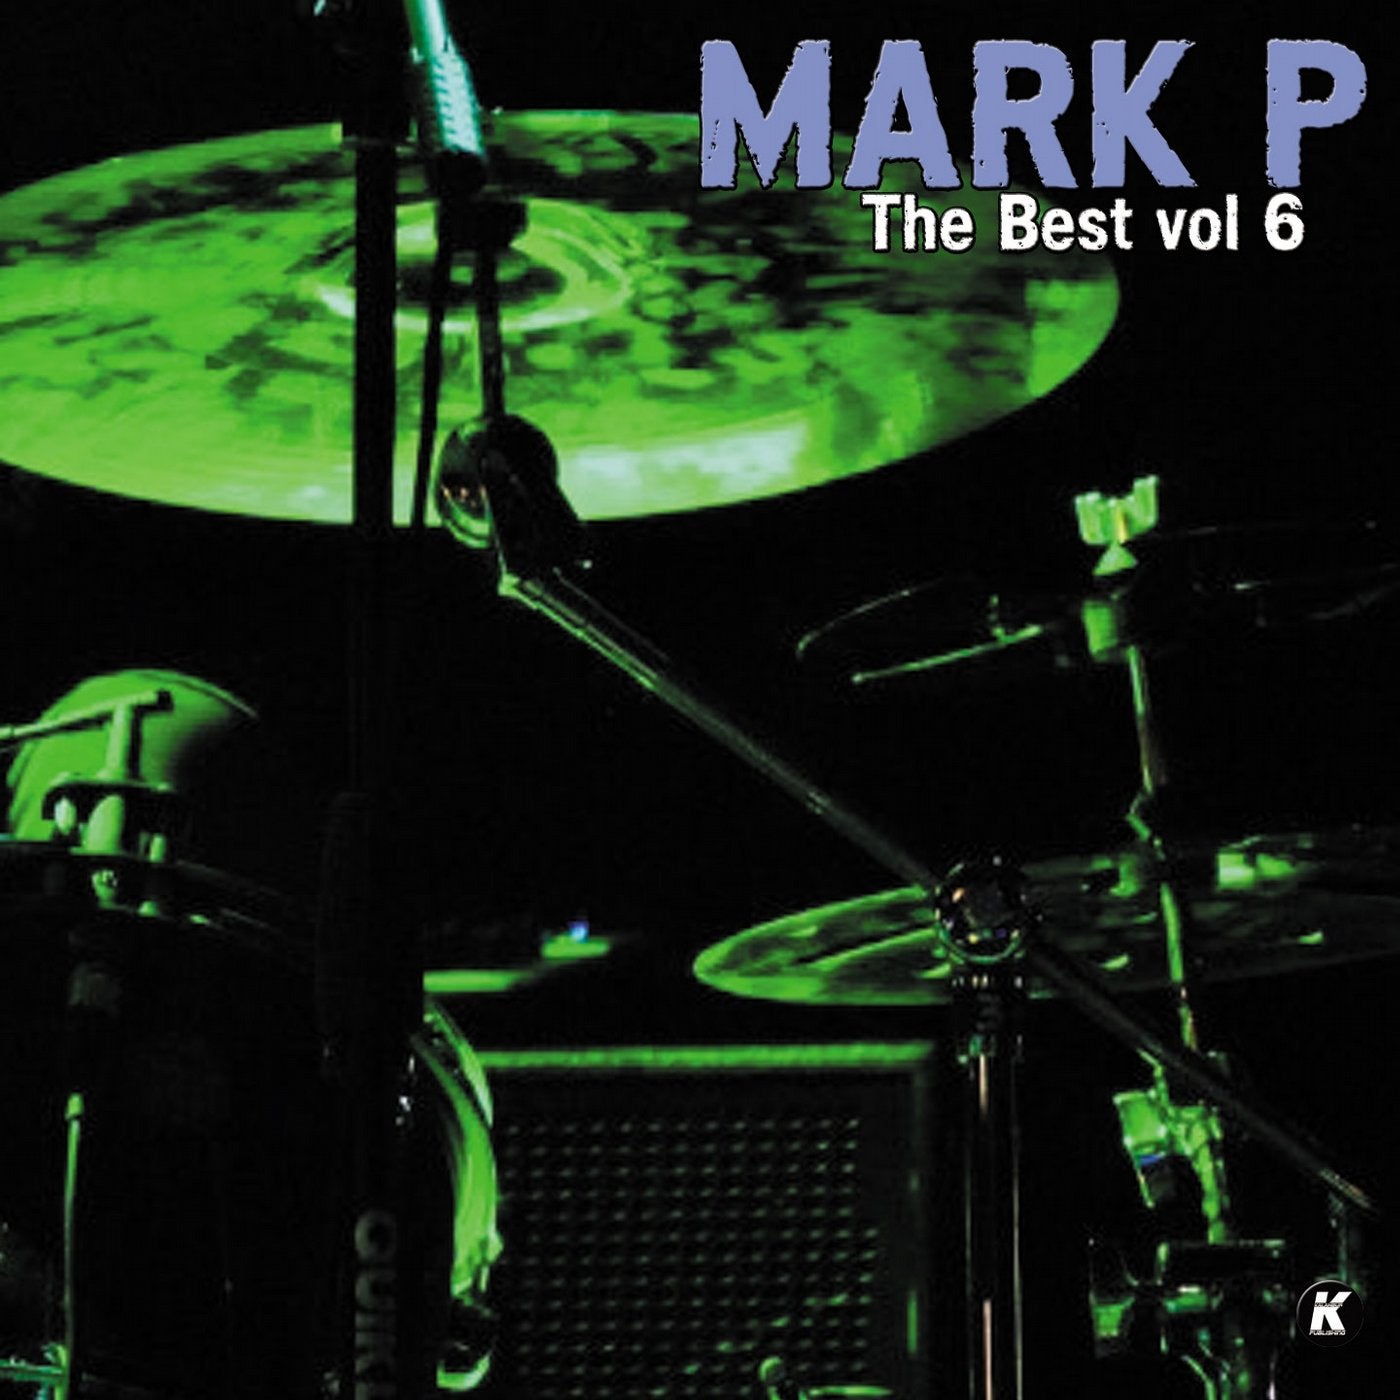 MARK P THE BEST VOL 6